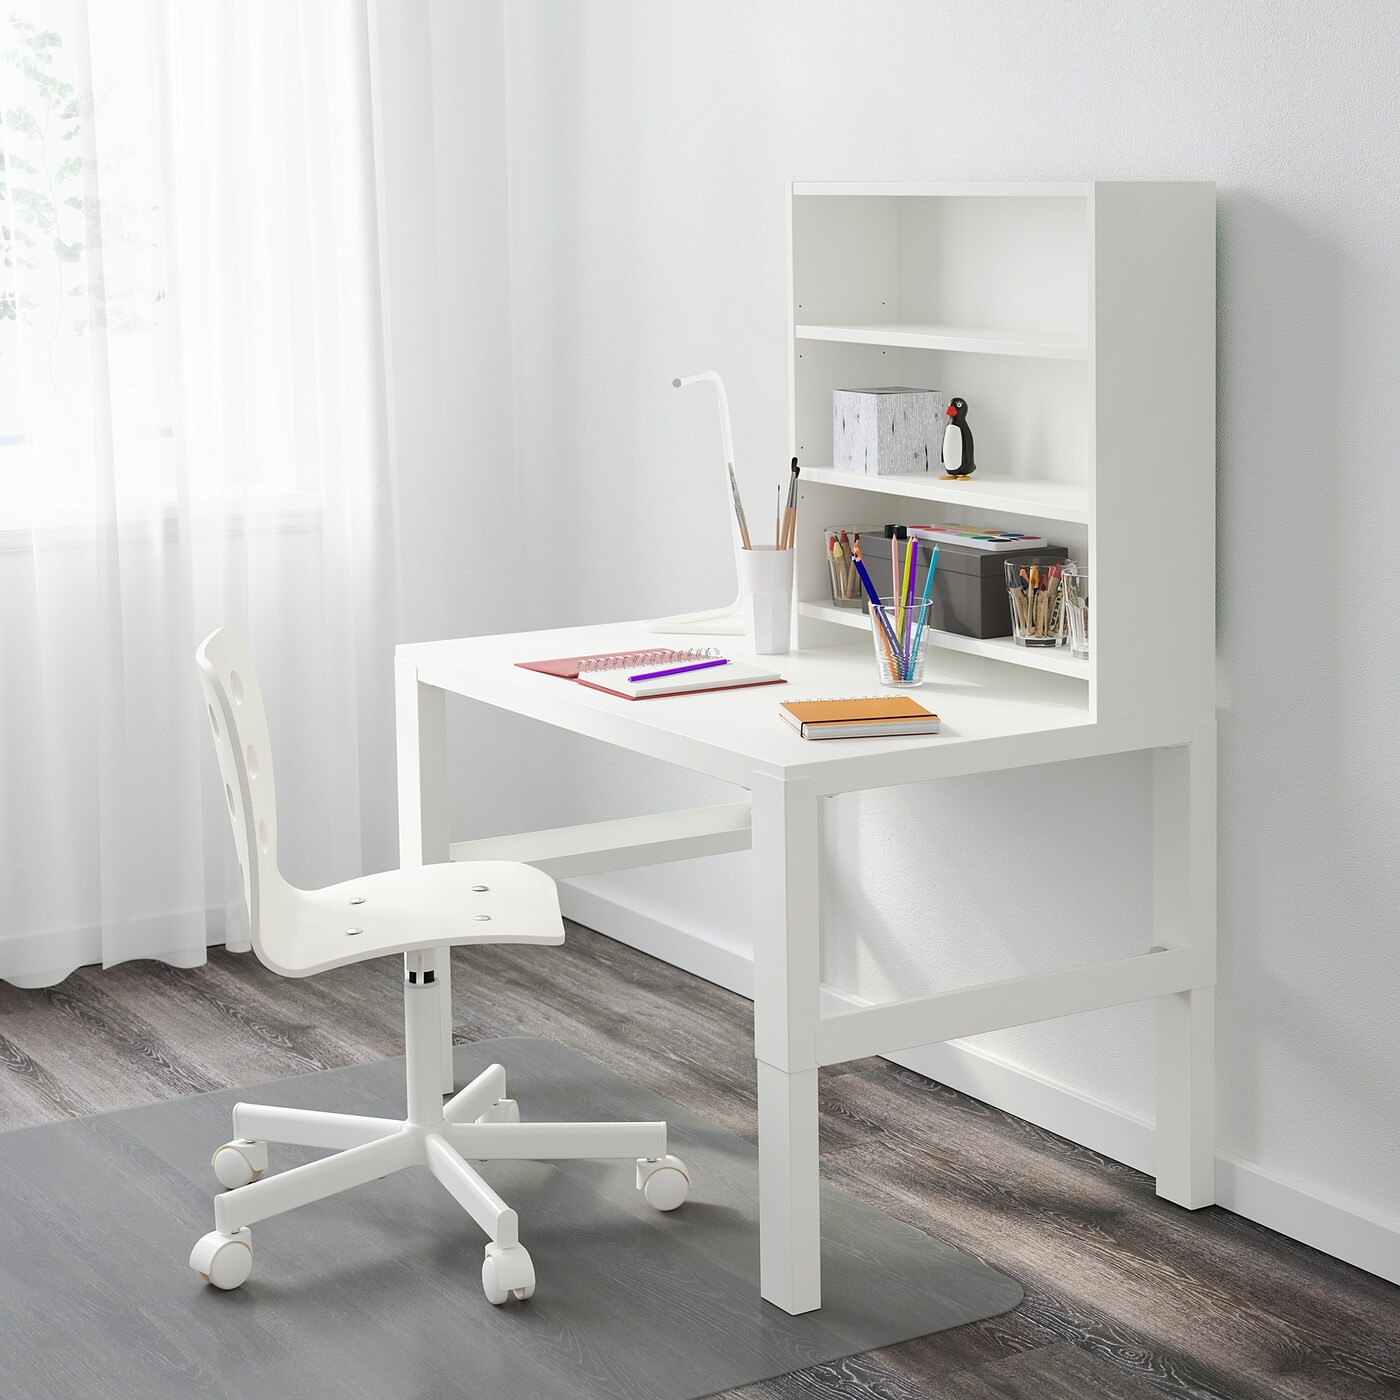 PÅHL Desk with shelf unit